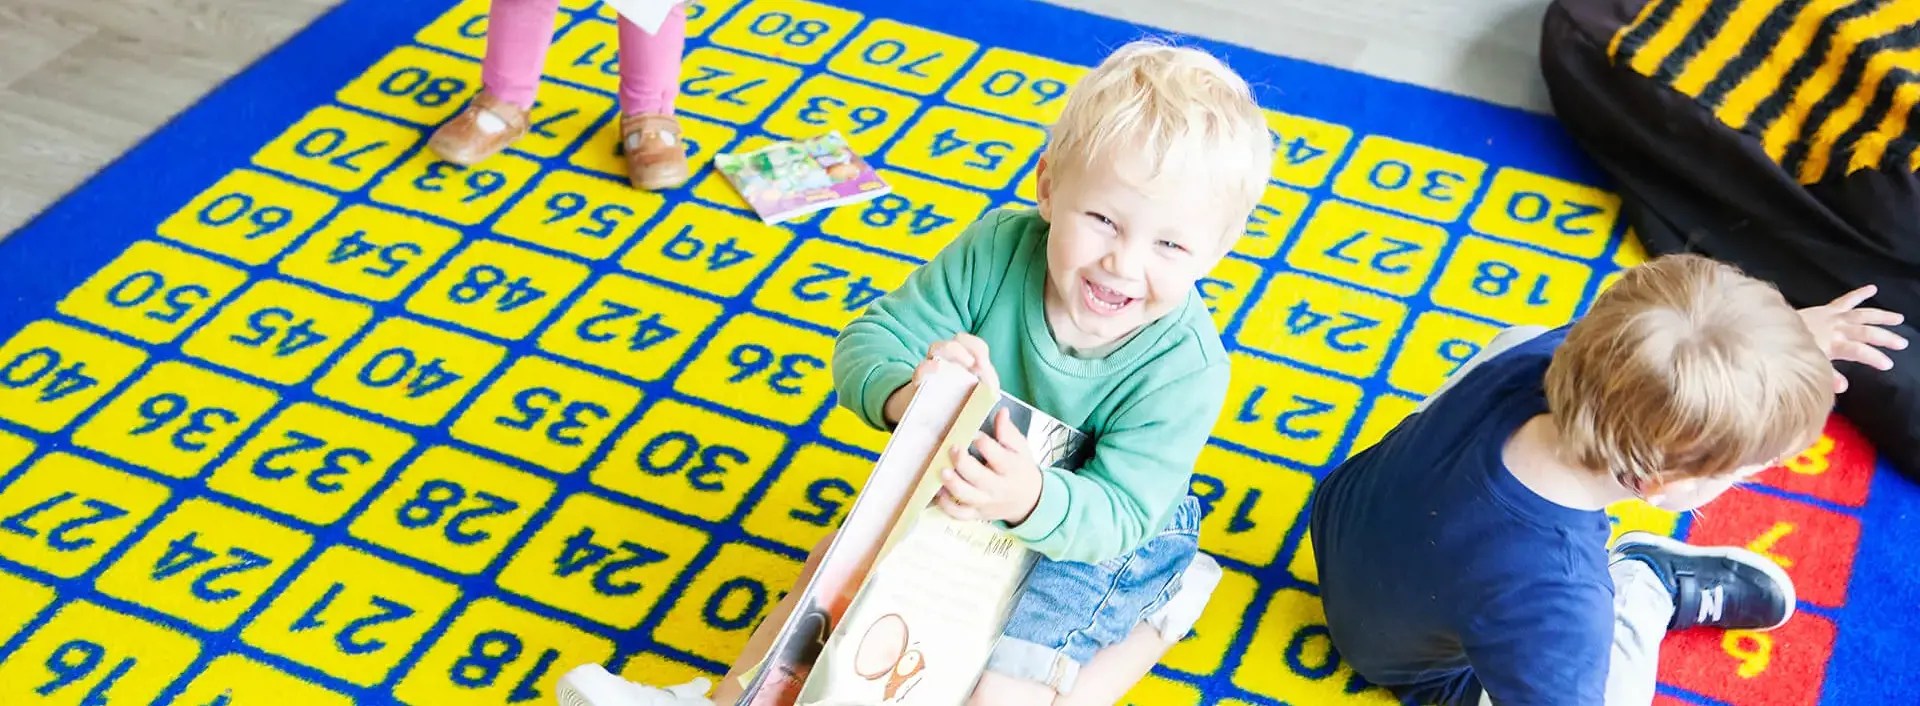 Nursery pupil on the playmat